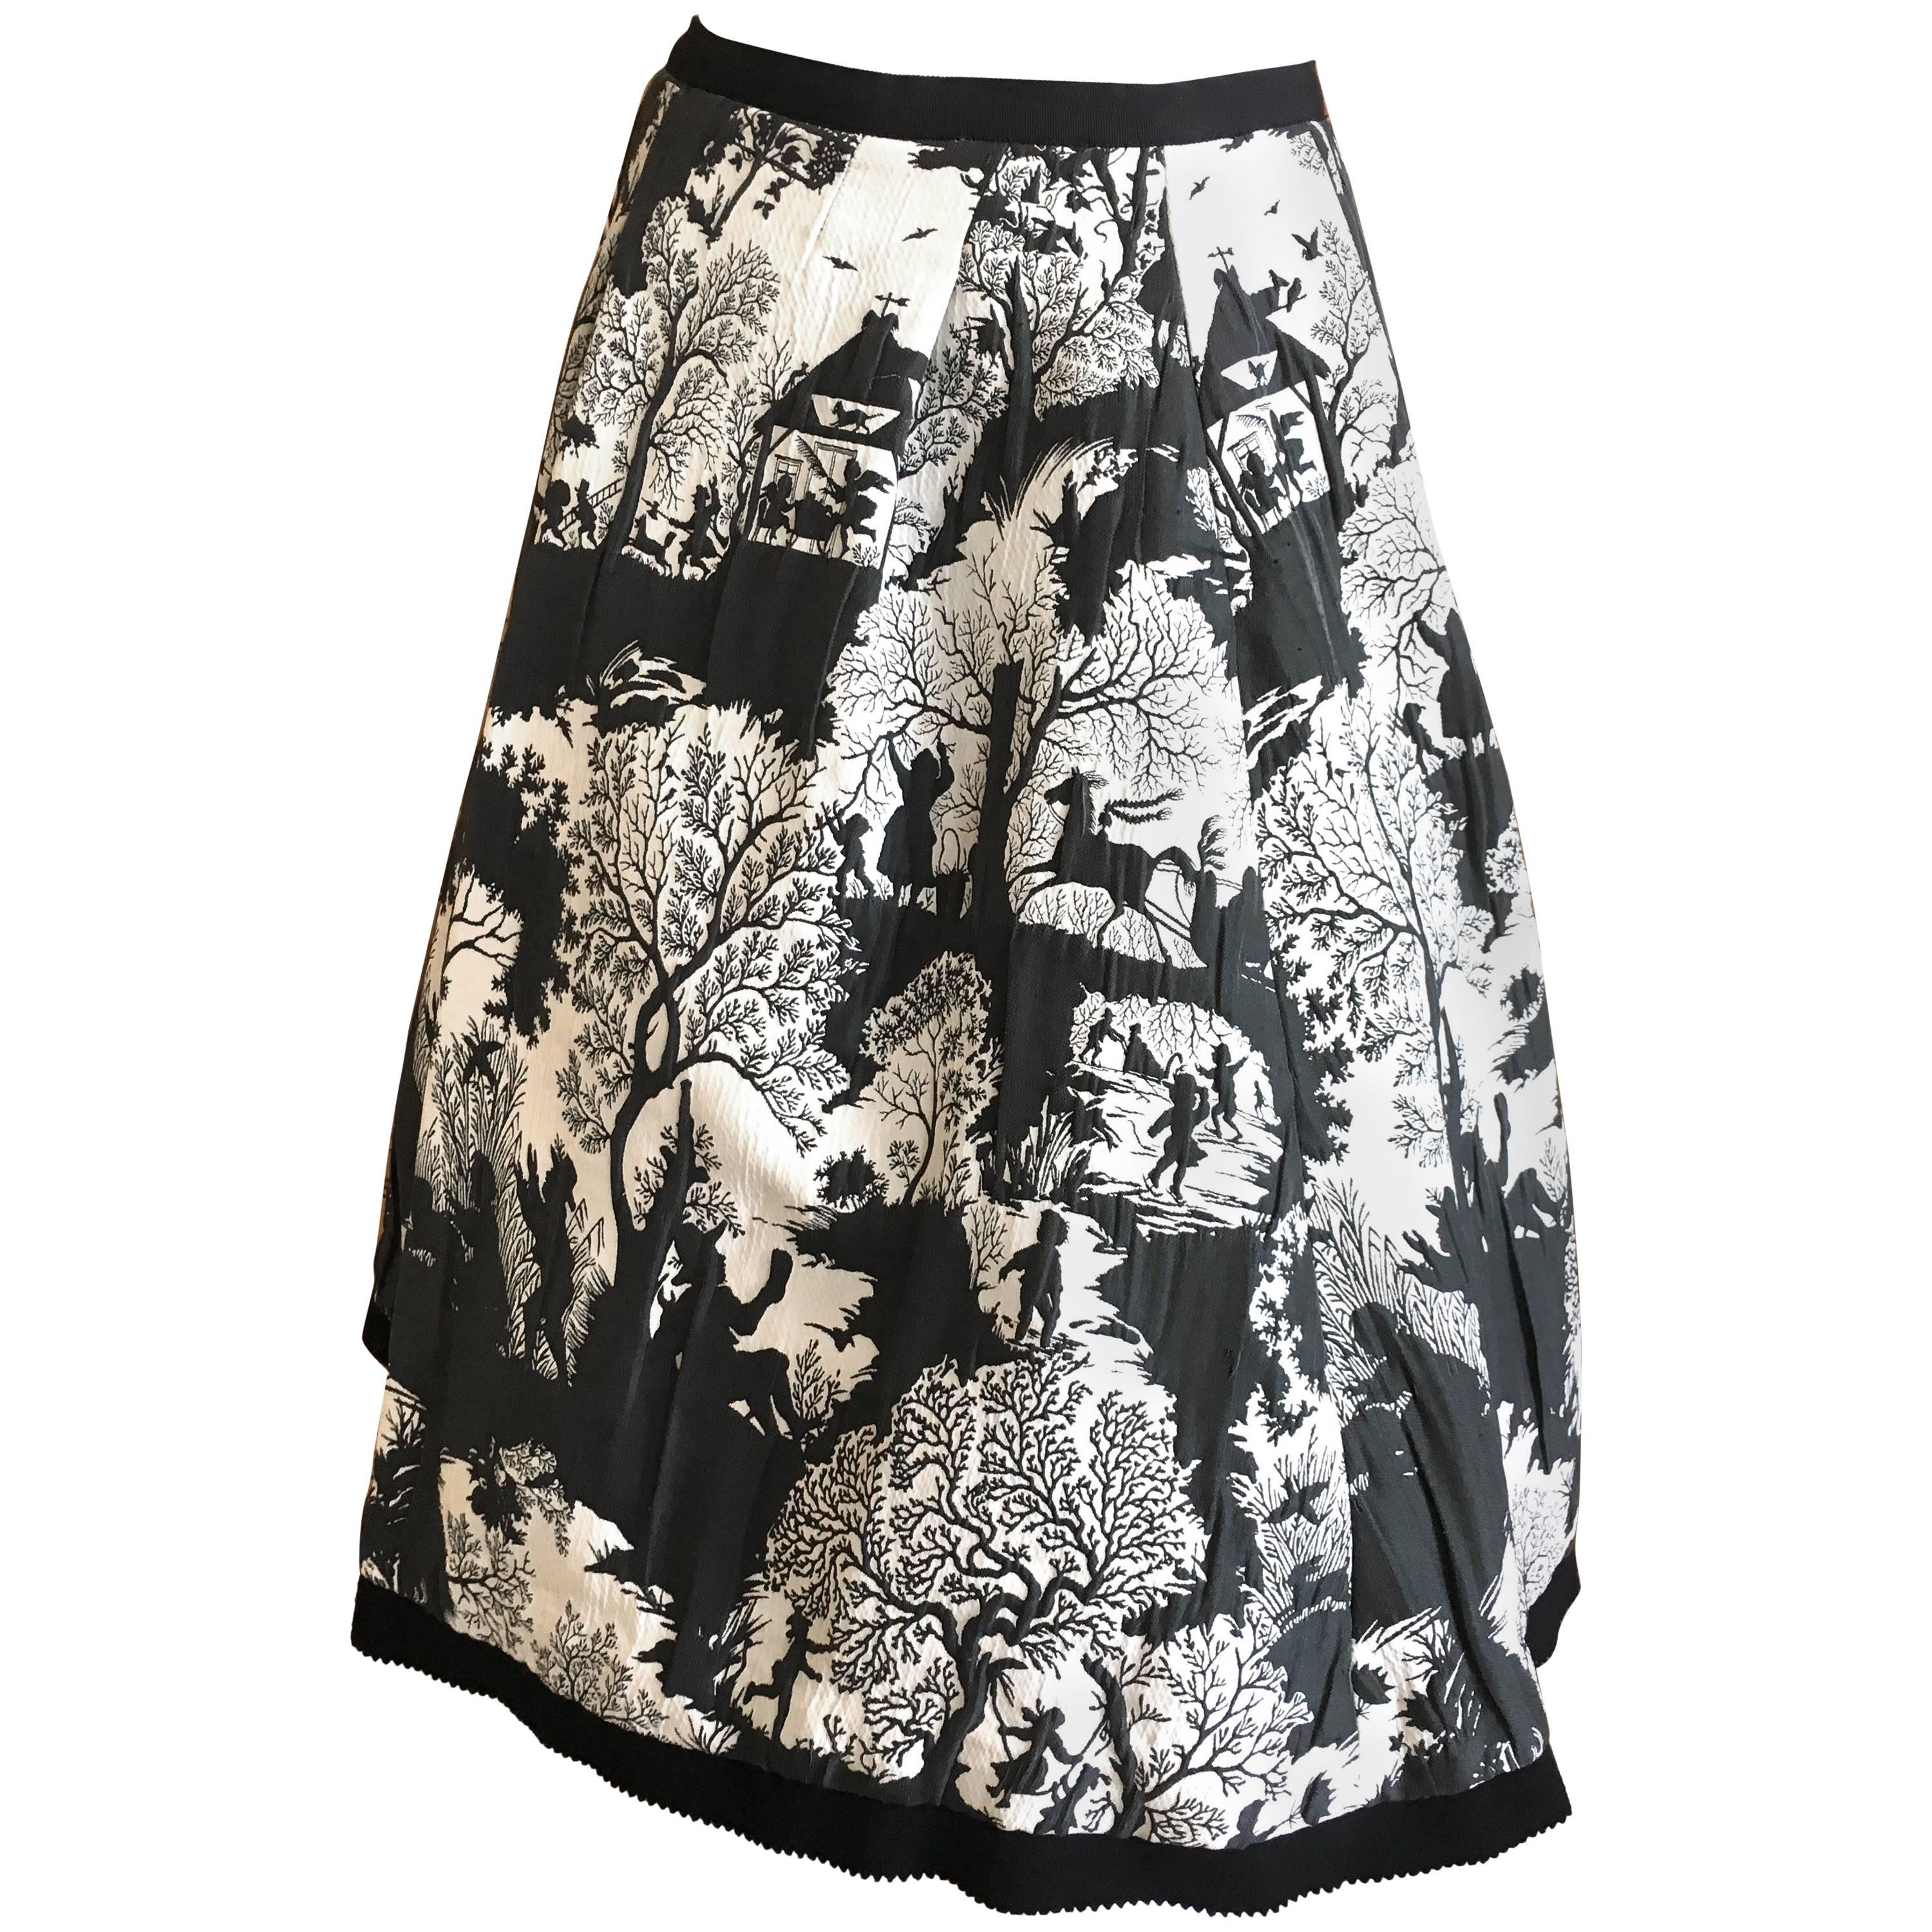 Oscar de la Renta Charming Black and White Toile de Jouy Skirt with 3 Petticoats For Sale